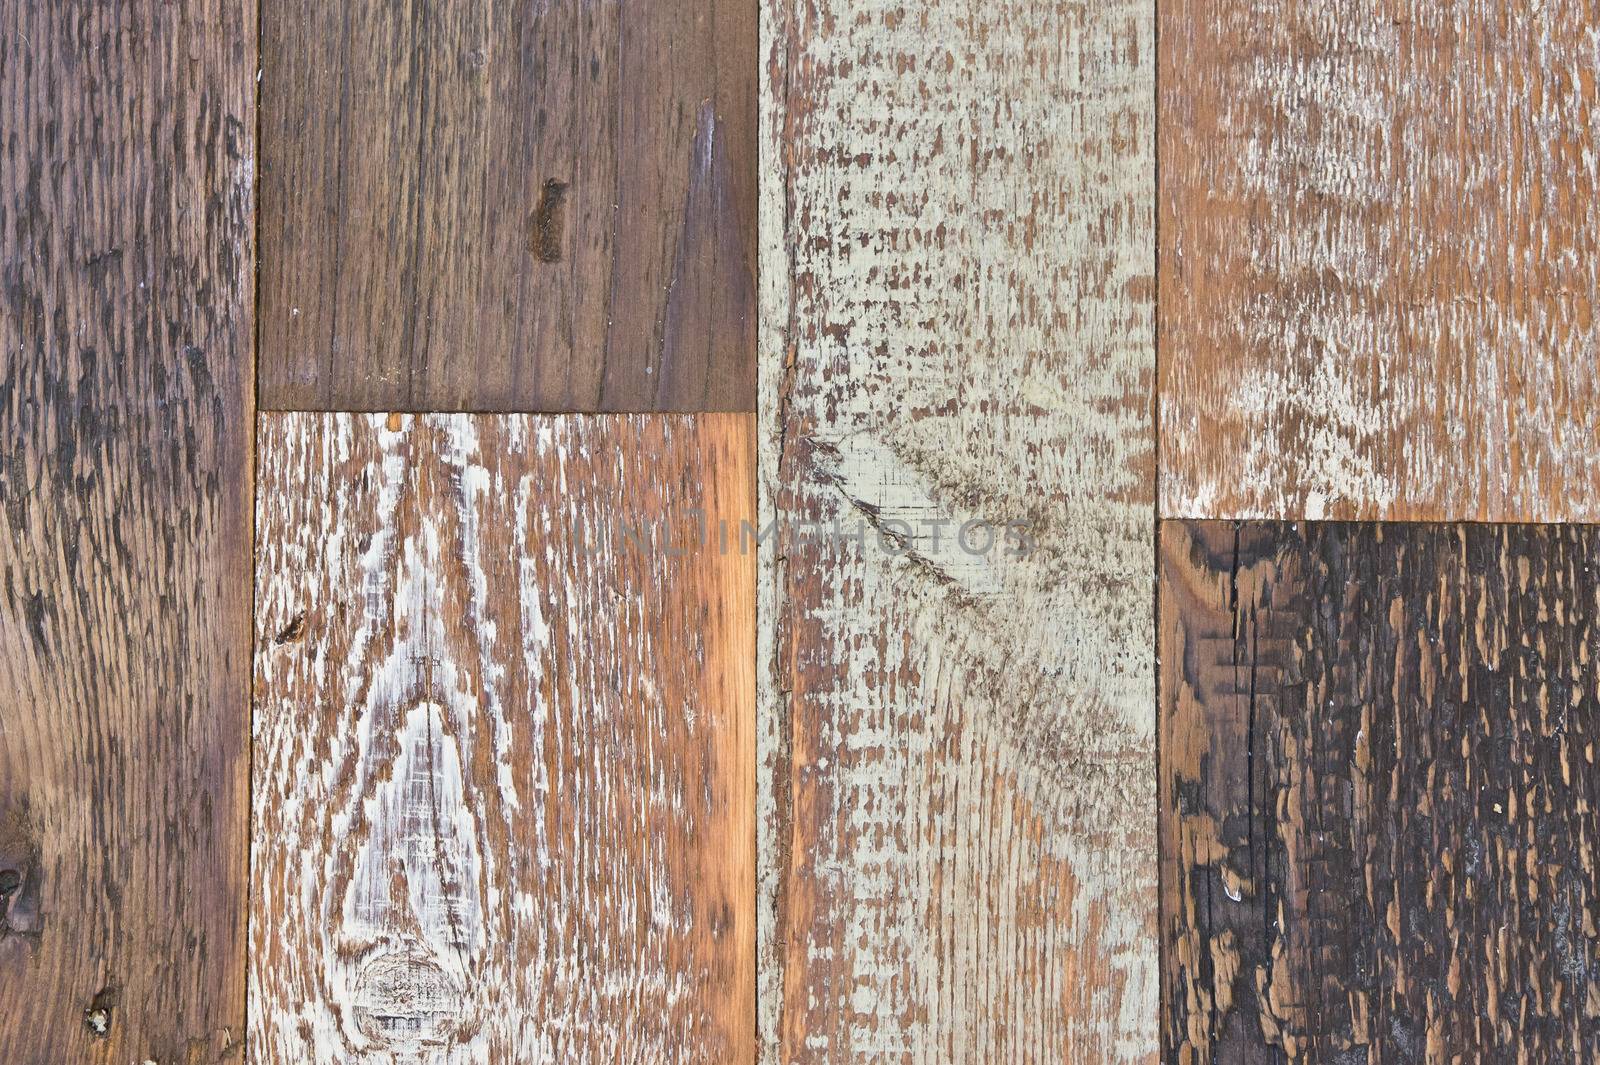 Wooden background by trgowanlock